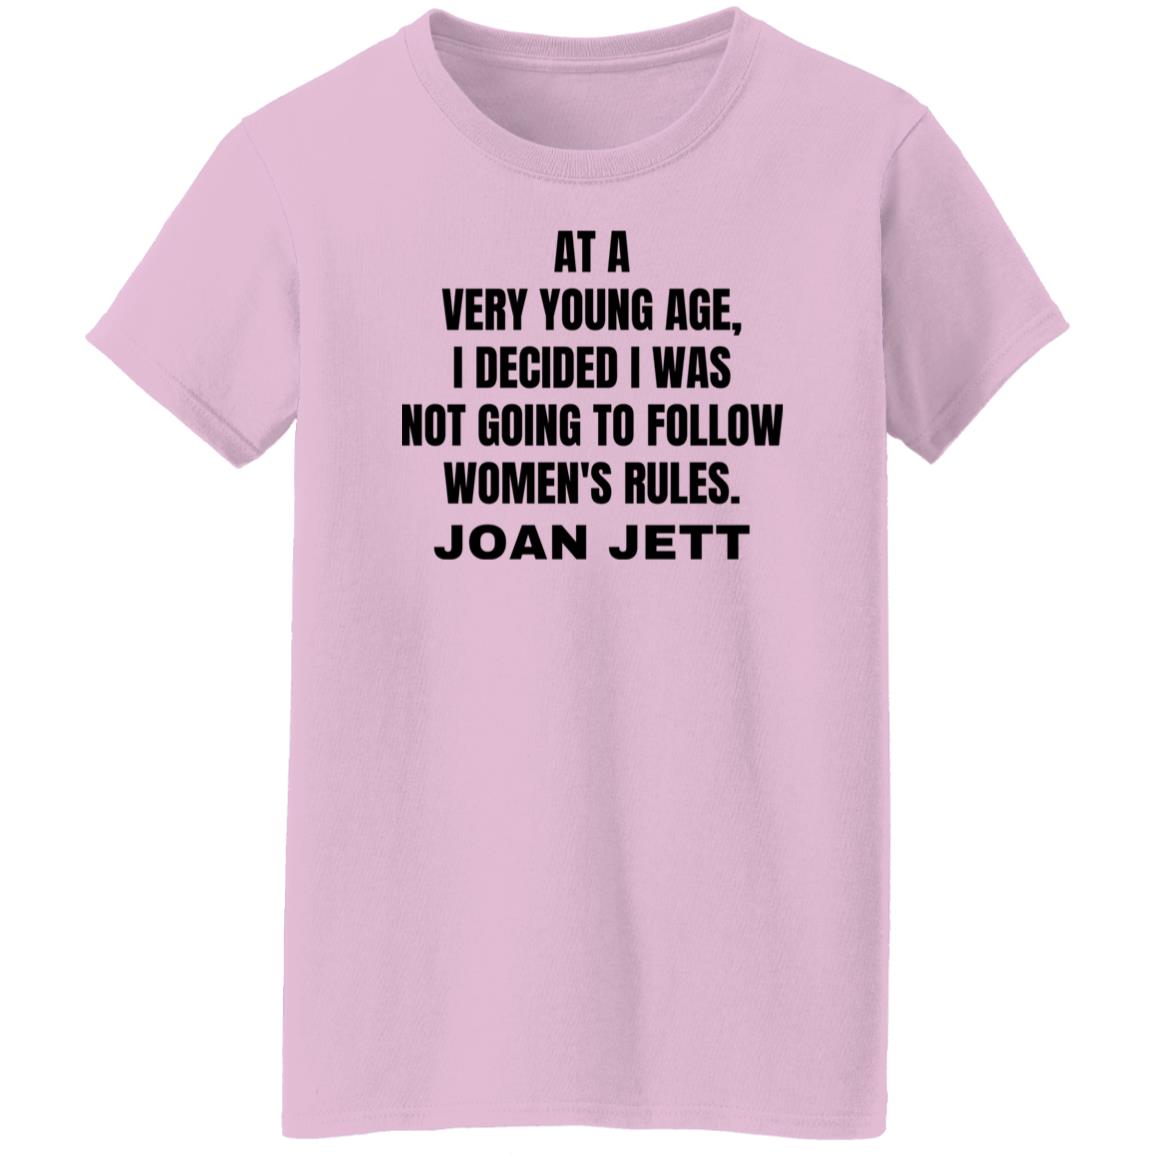 Joan Jett Women's Rules Quote T-Shirt